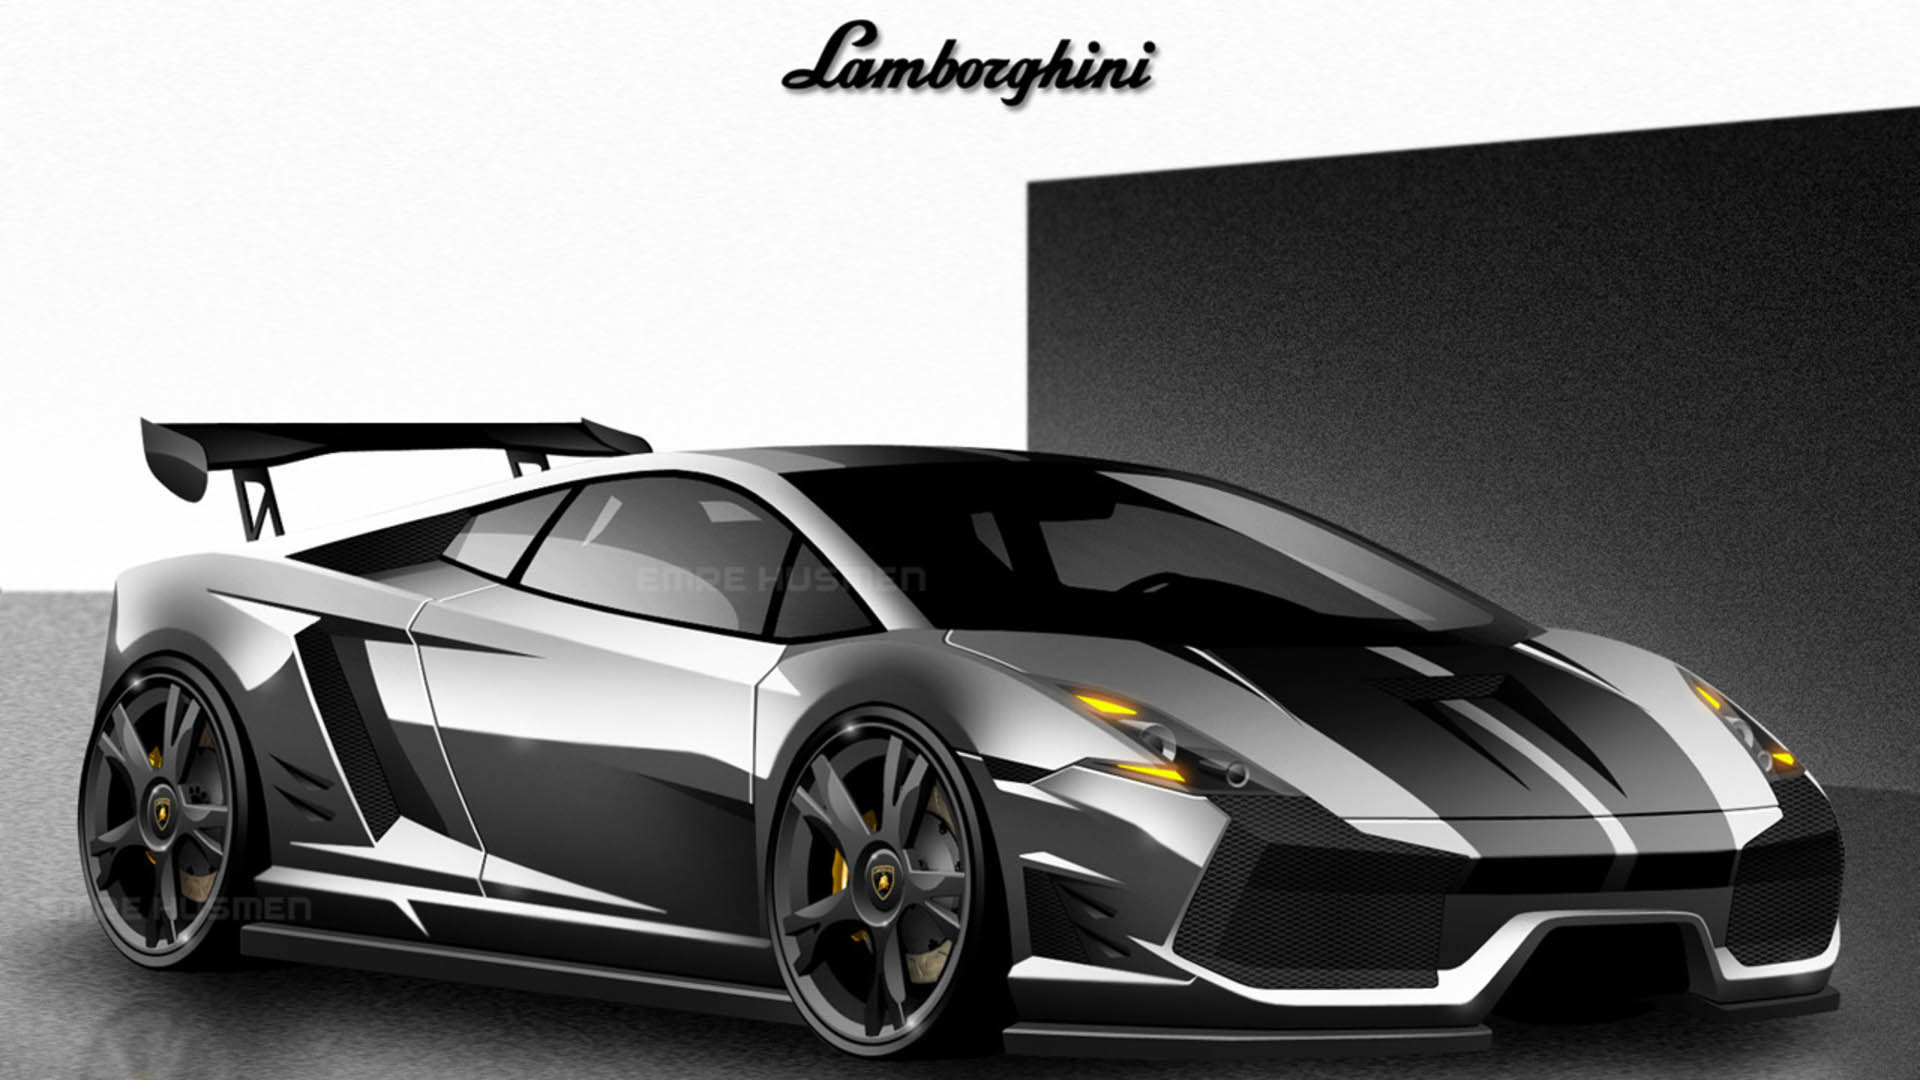 Lamborghini Background free download | PixelsTalk.Net